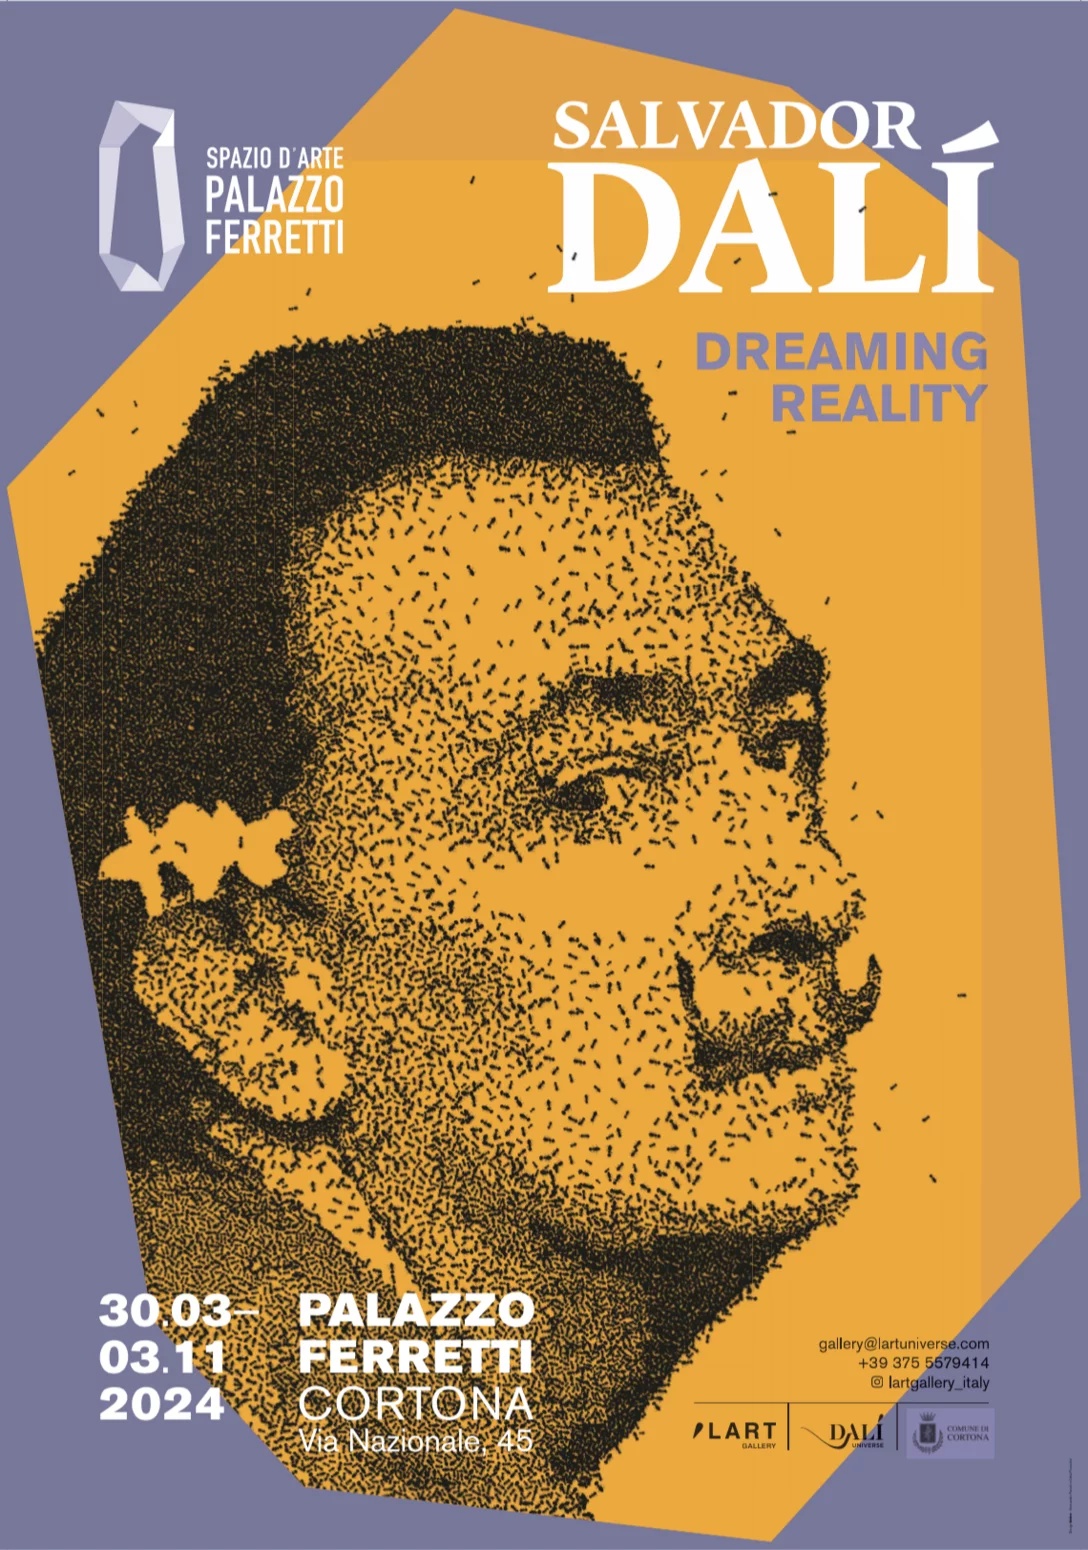 Dalí Dreaming Reality